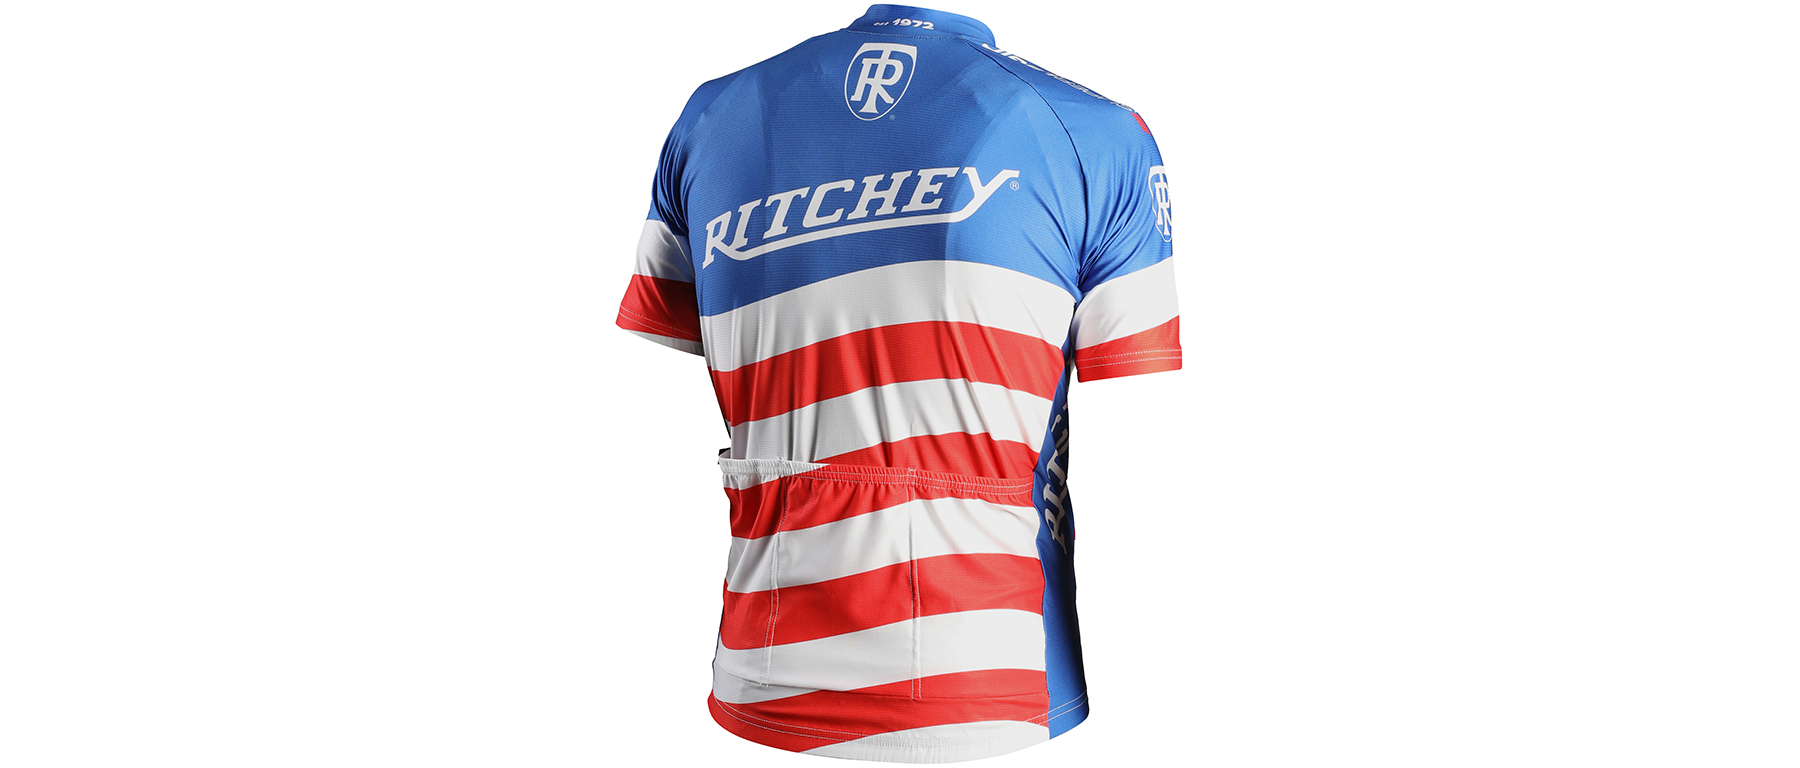 Ritchey Team Jersey